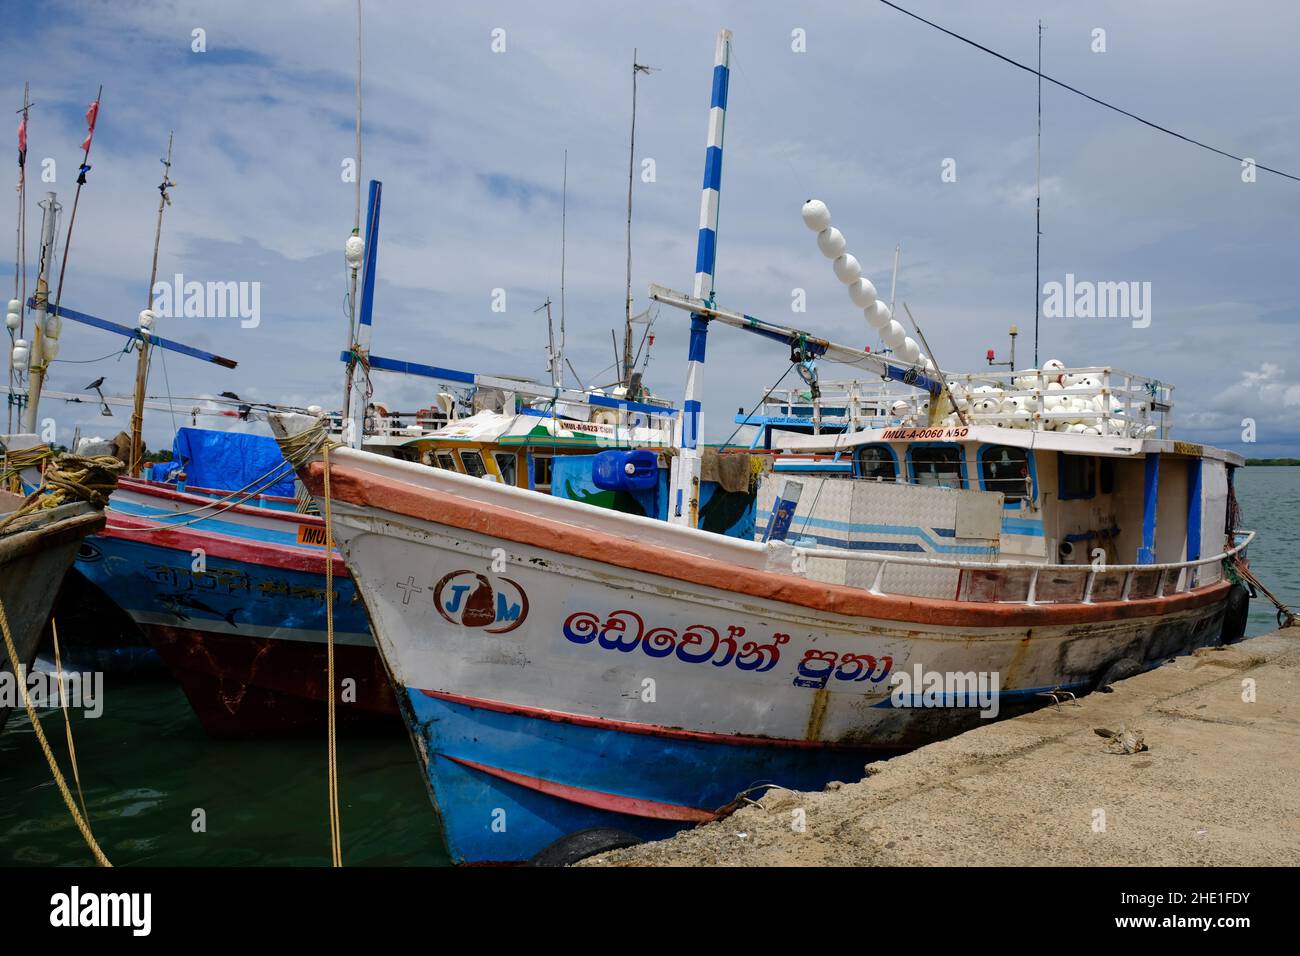 Sri Lanka Kalpitiya  - Fishery harbour fishing vessels Stock Photo